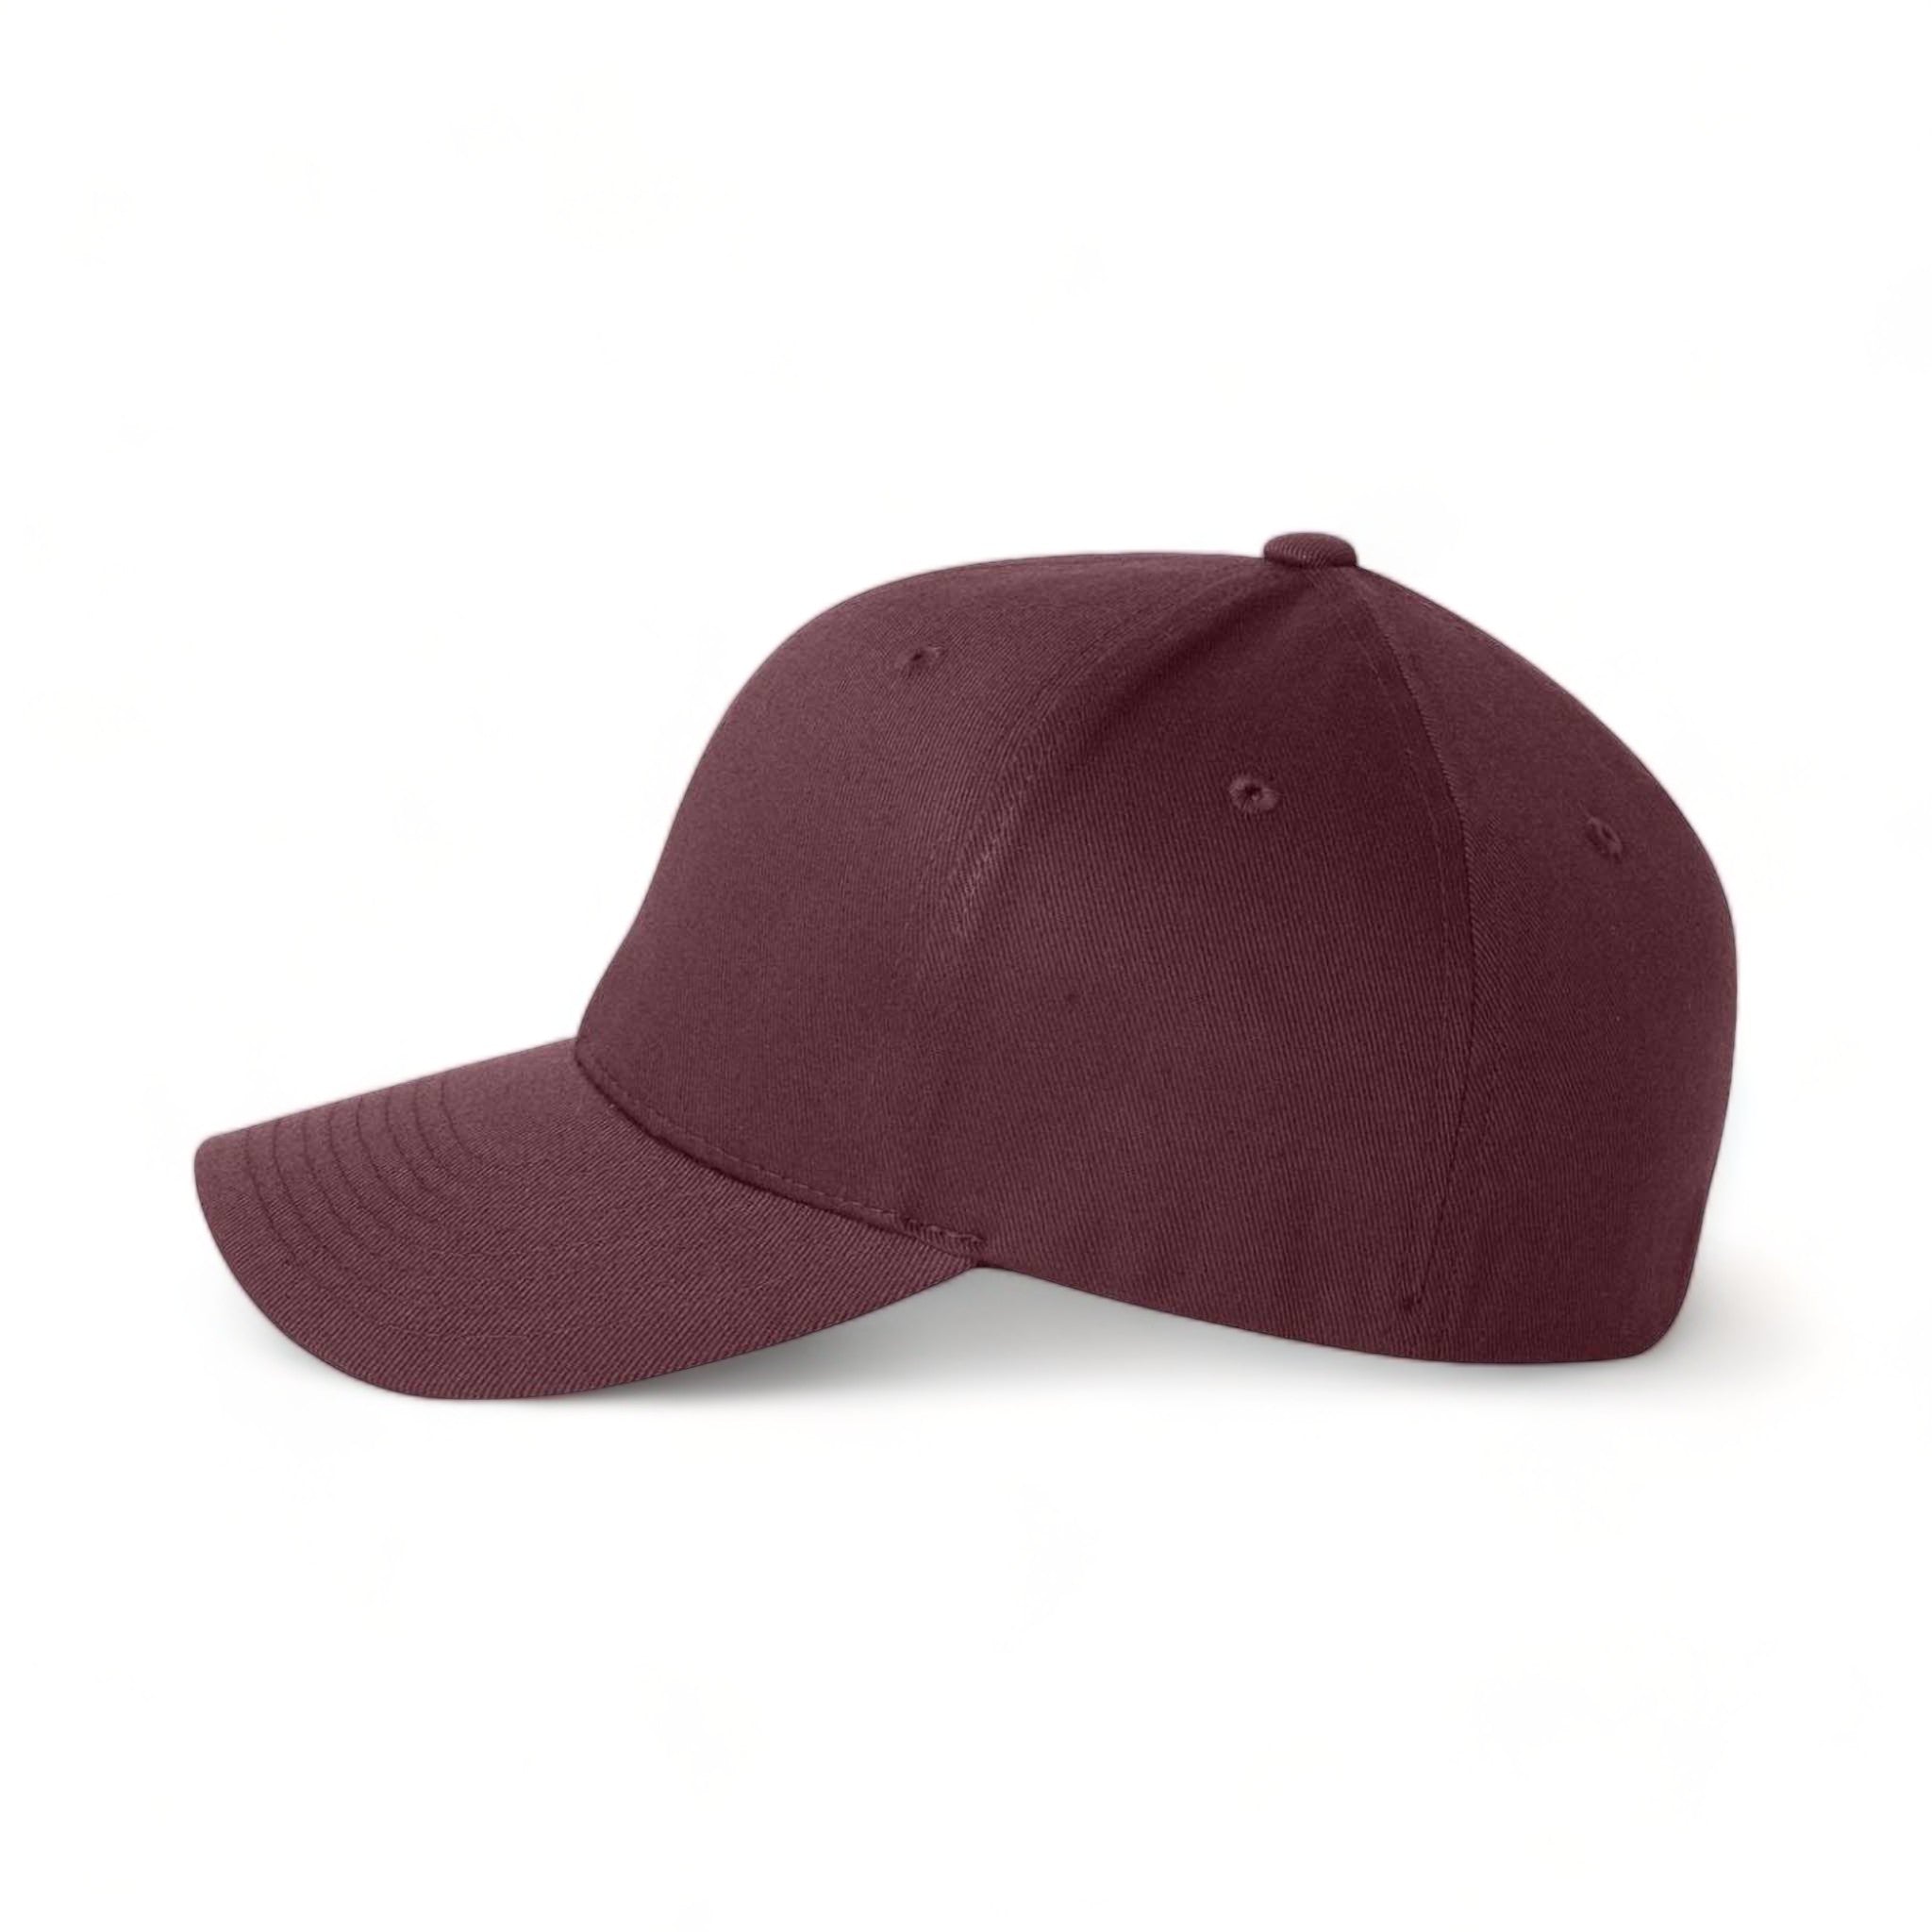 Side view of Flexfit 6277 custom hat in maroon